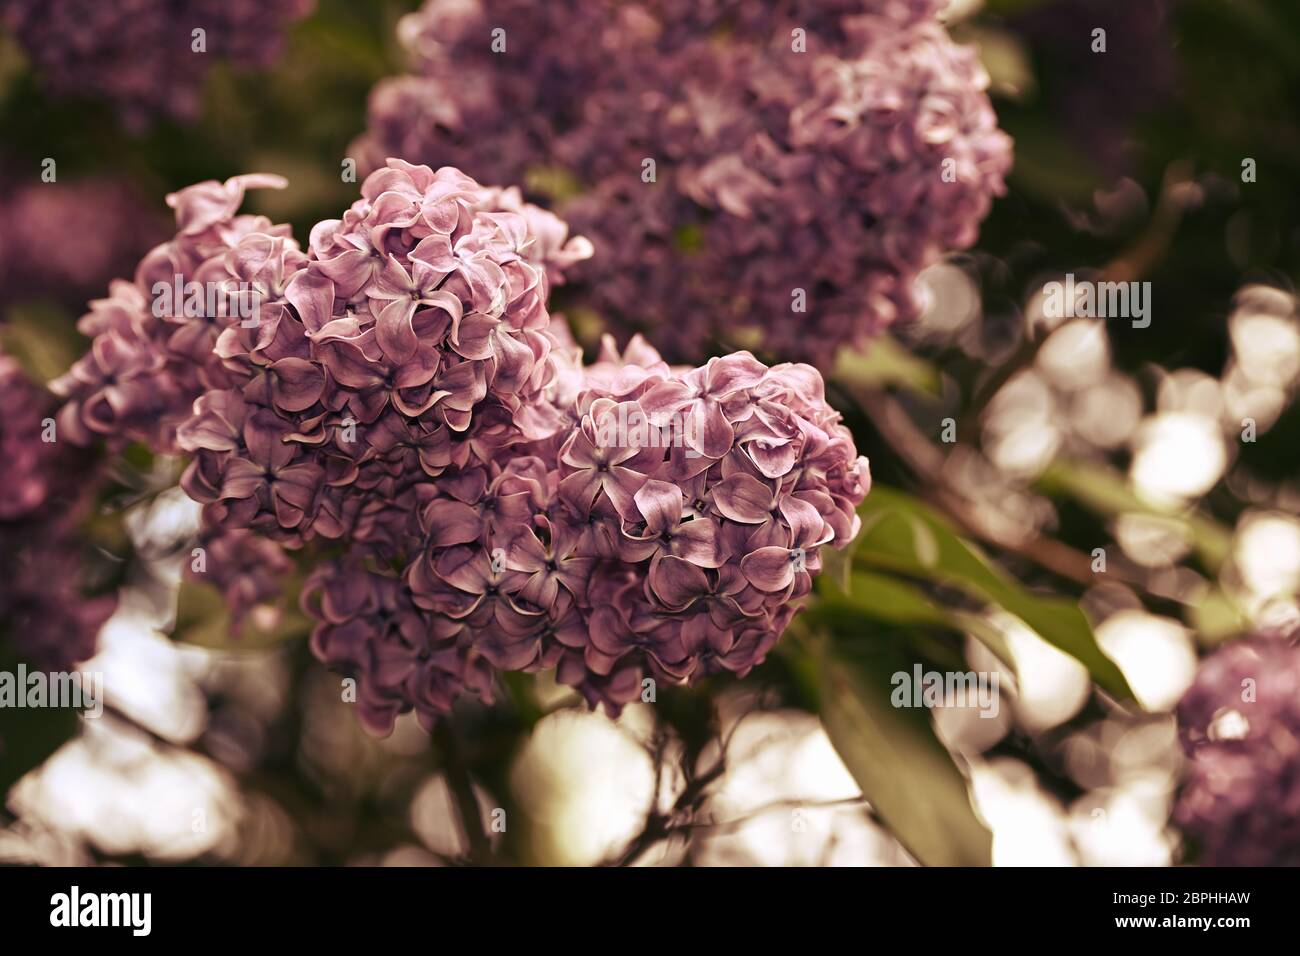 Lilac, syringa flower in closeup. Stock Photo